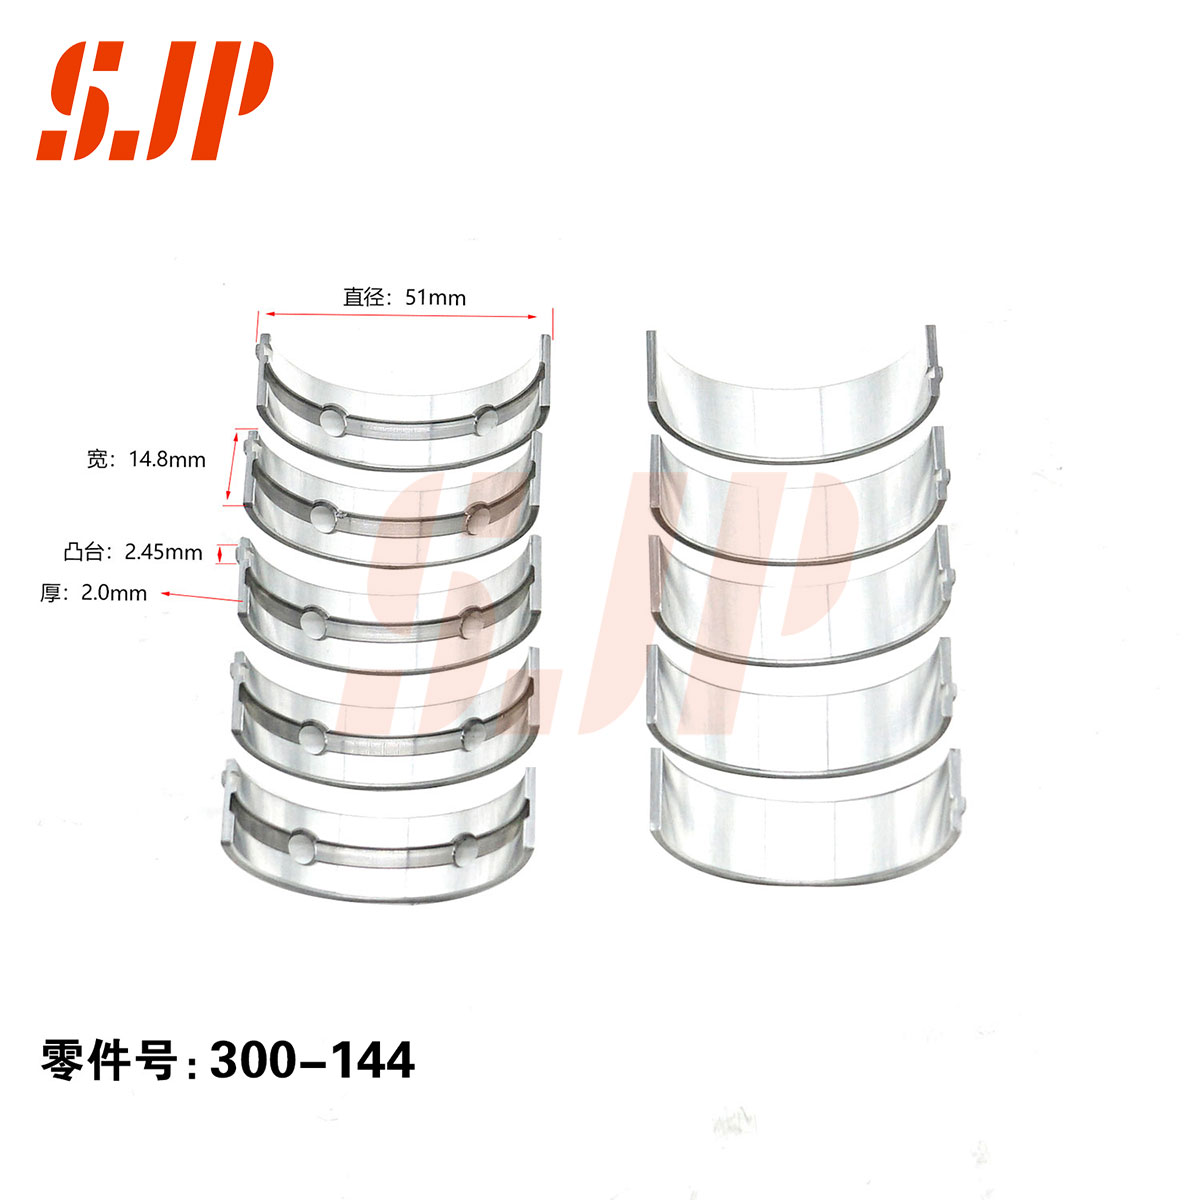 SJ-300-144 Main Bearing Set For FAW-JIABAO V80/4A15